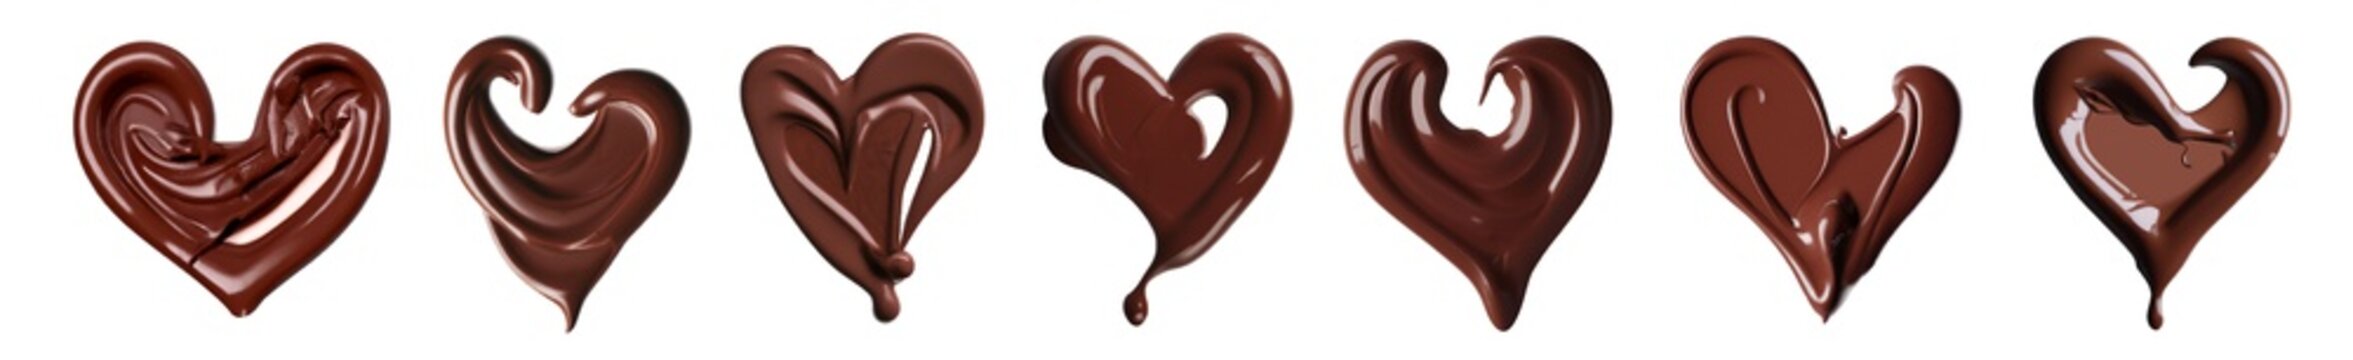 Chocolate splashes in heart shape isolated on white background.